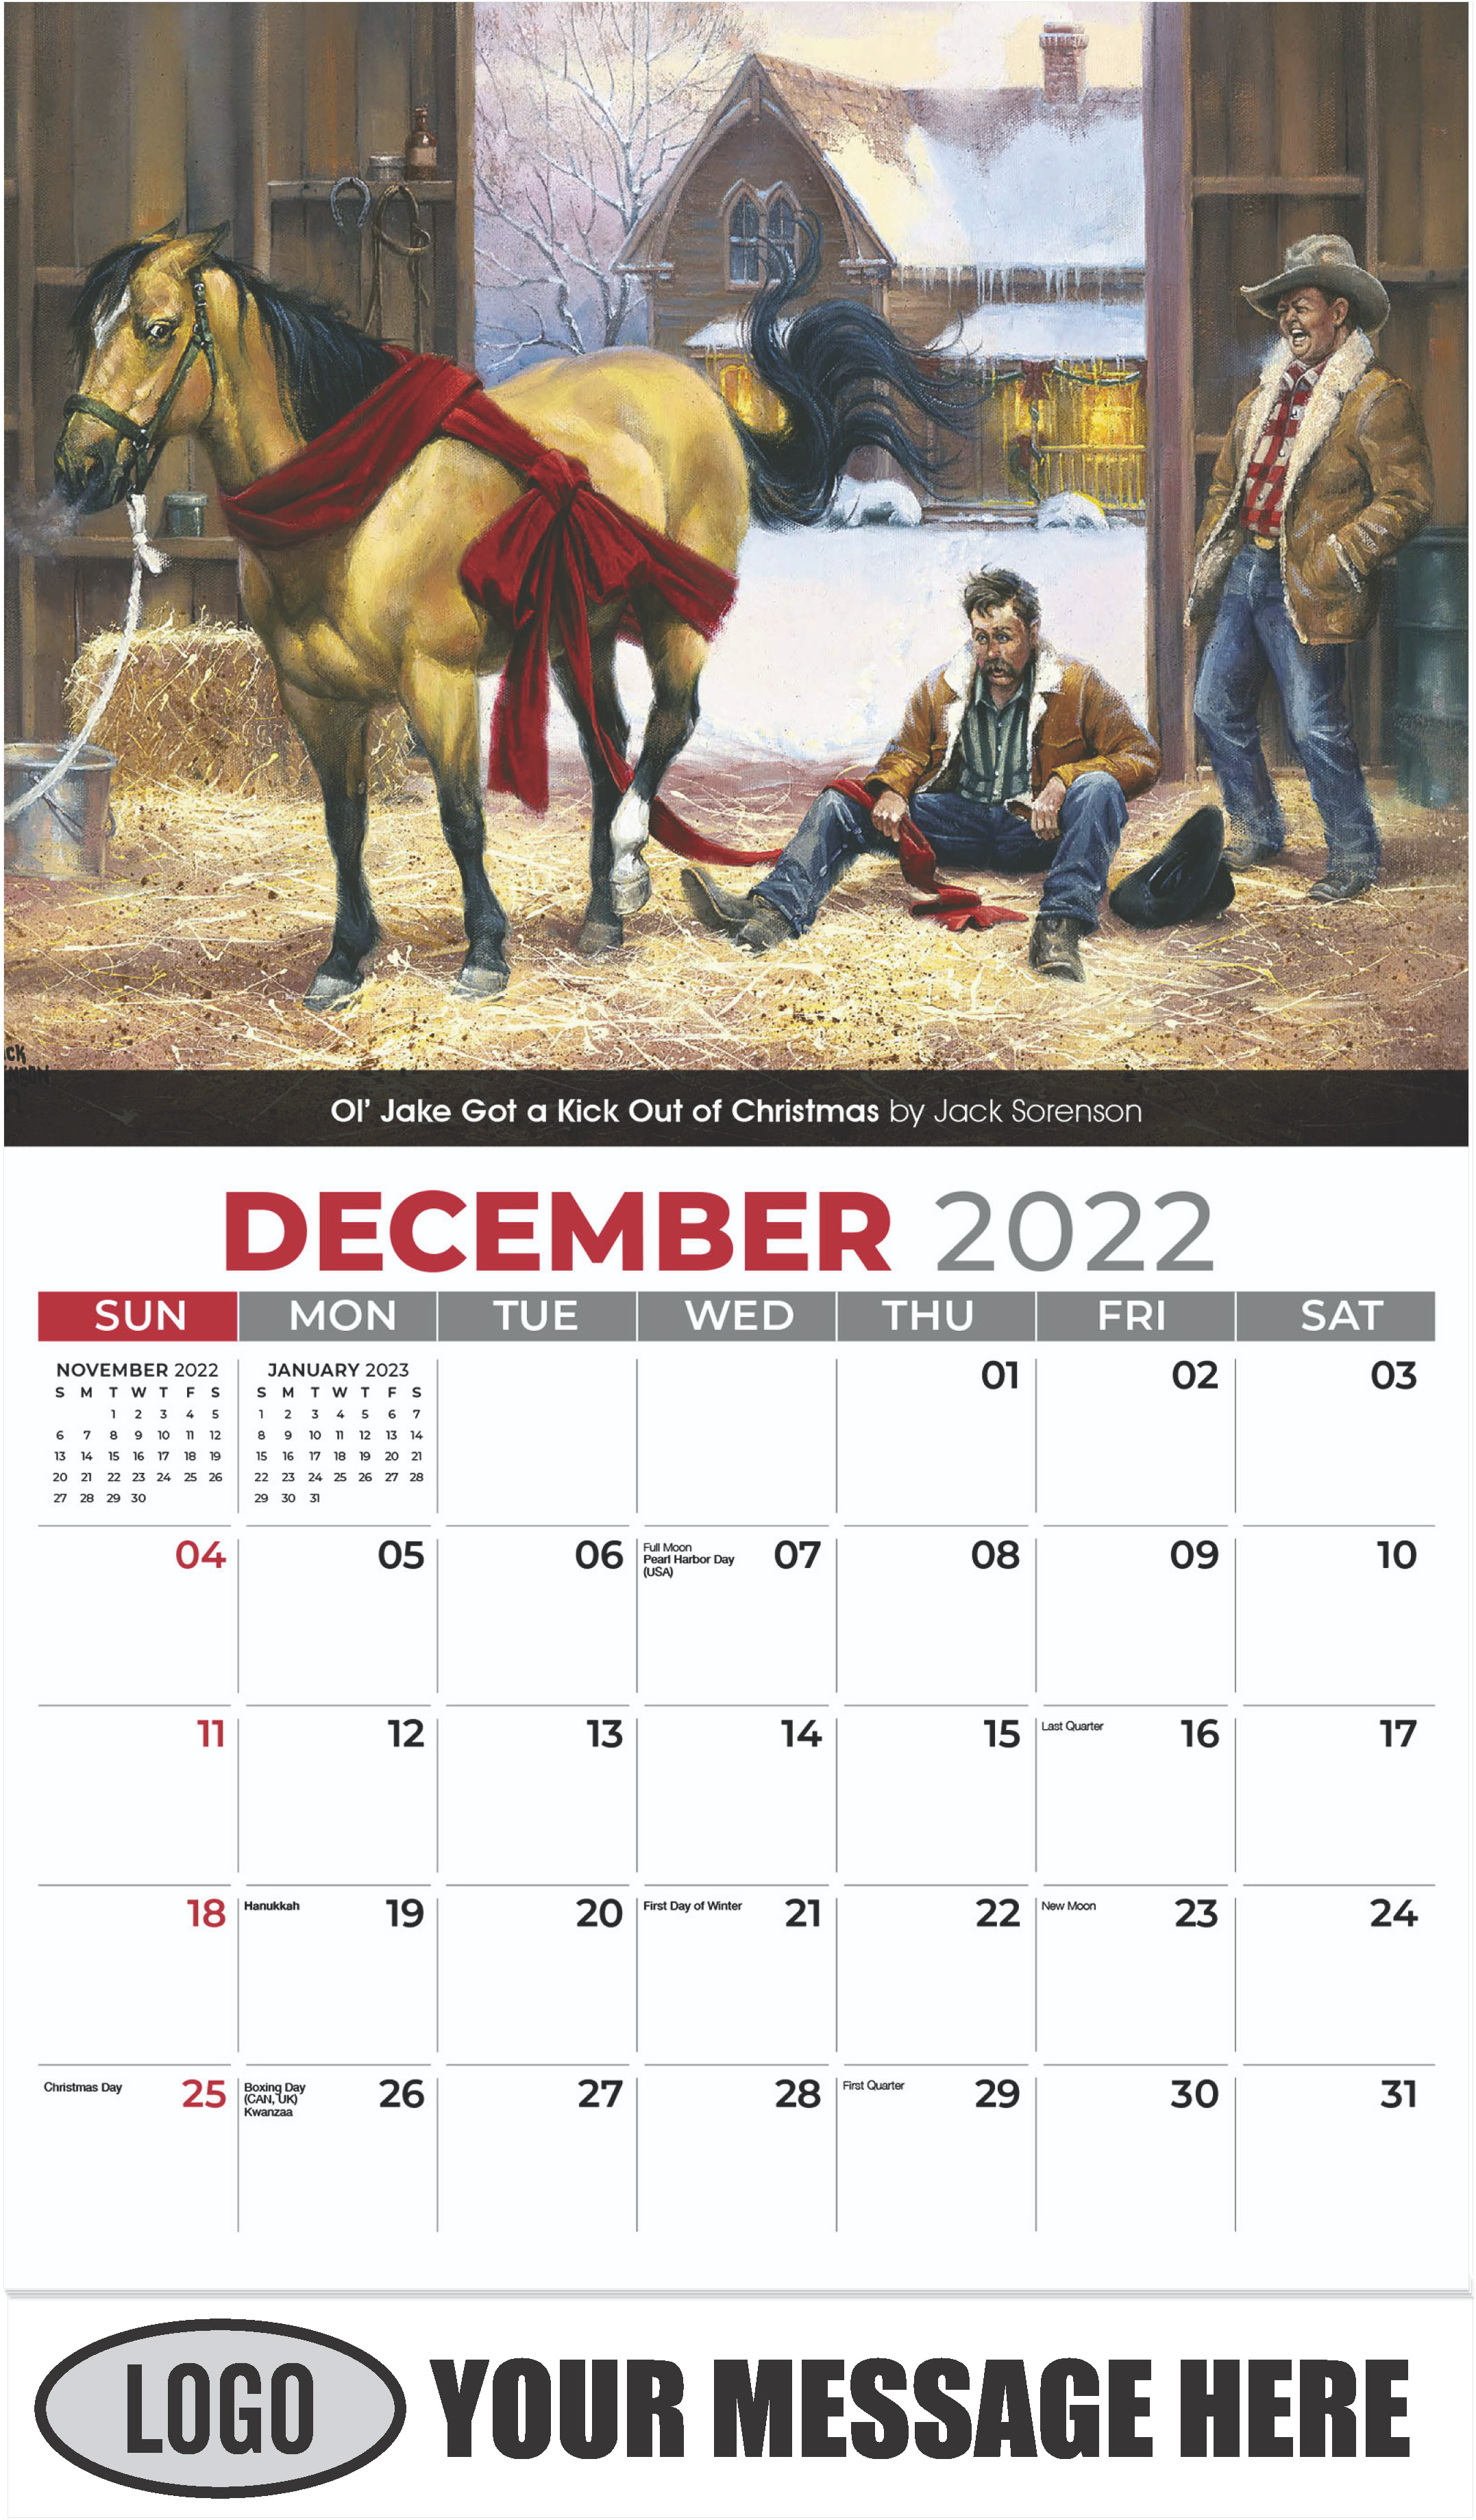 Ol’ Jake Got a Kick Out of Christmas by Jack Sorenson - December 2022 - Spirit of the West 2023 Promotional Calendar